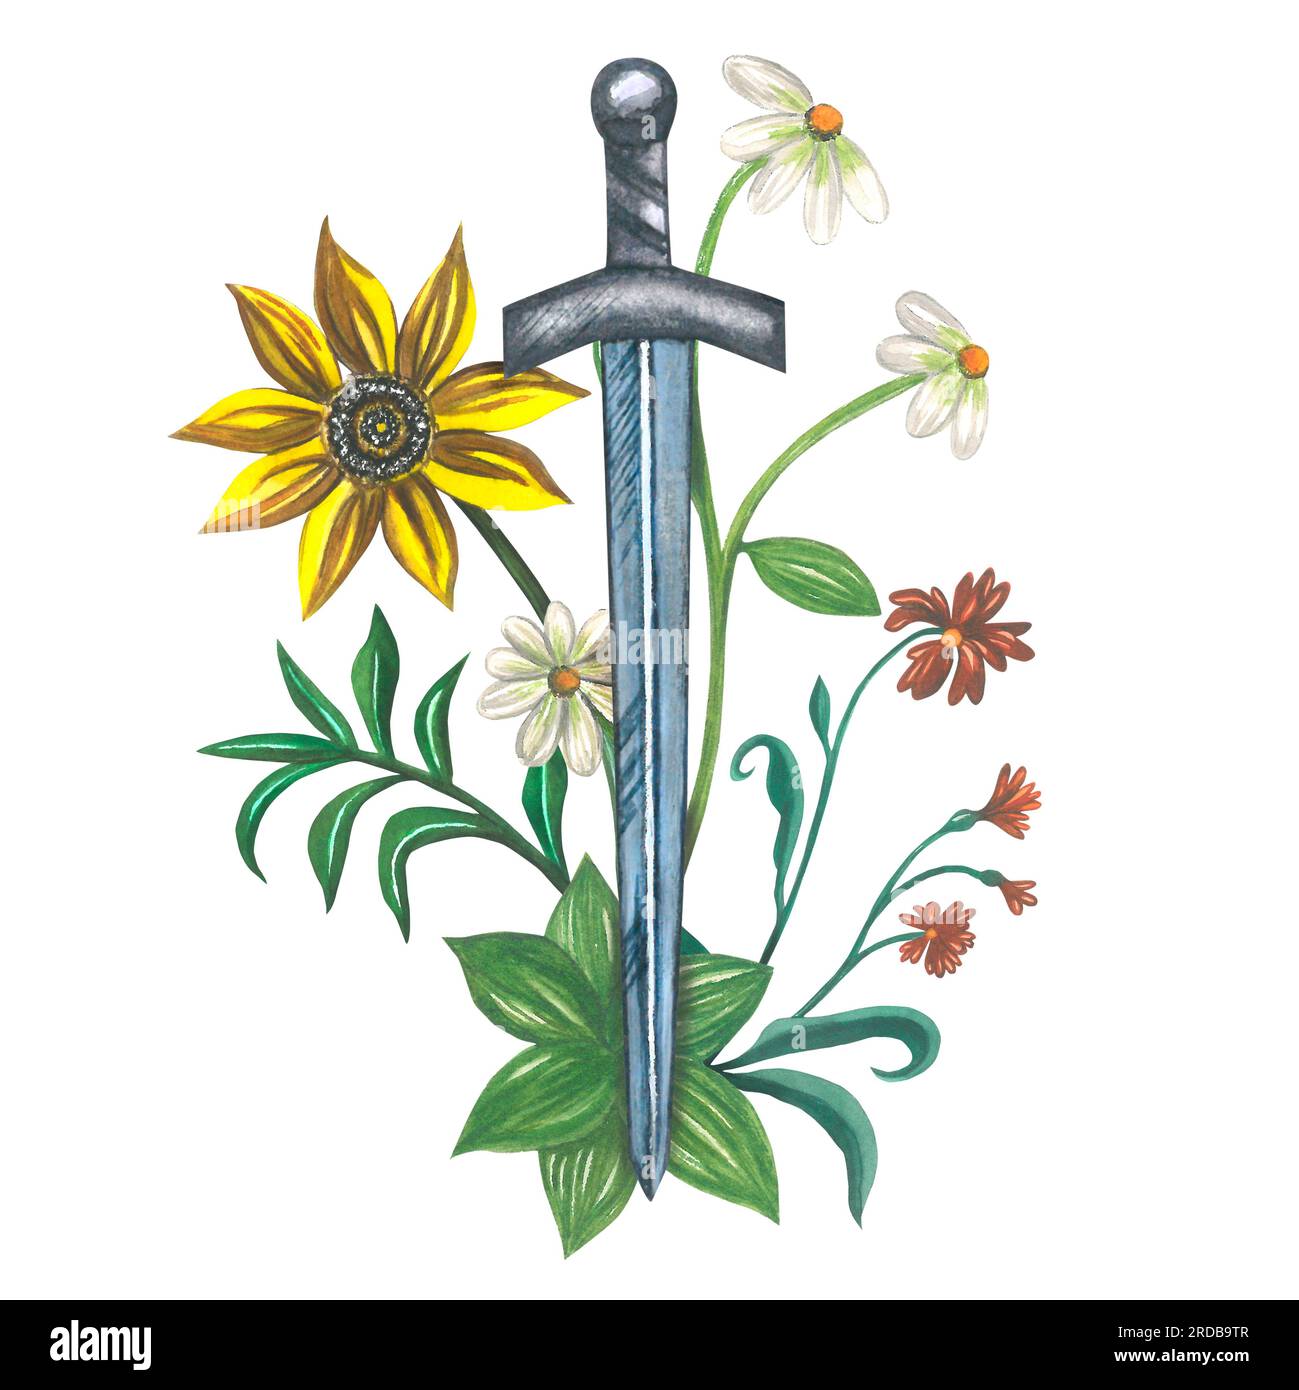 50 Sharp Sword Tattoo Designs  Symbolism Of Warriors - Worldwide Tattoo &  Piercing Blog